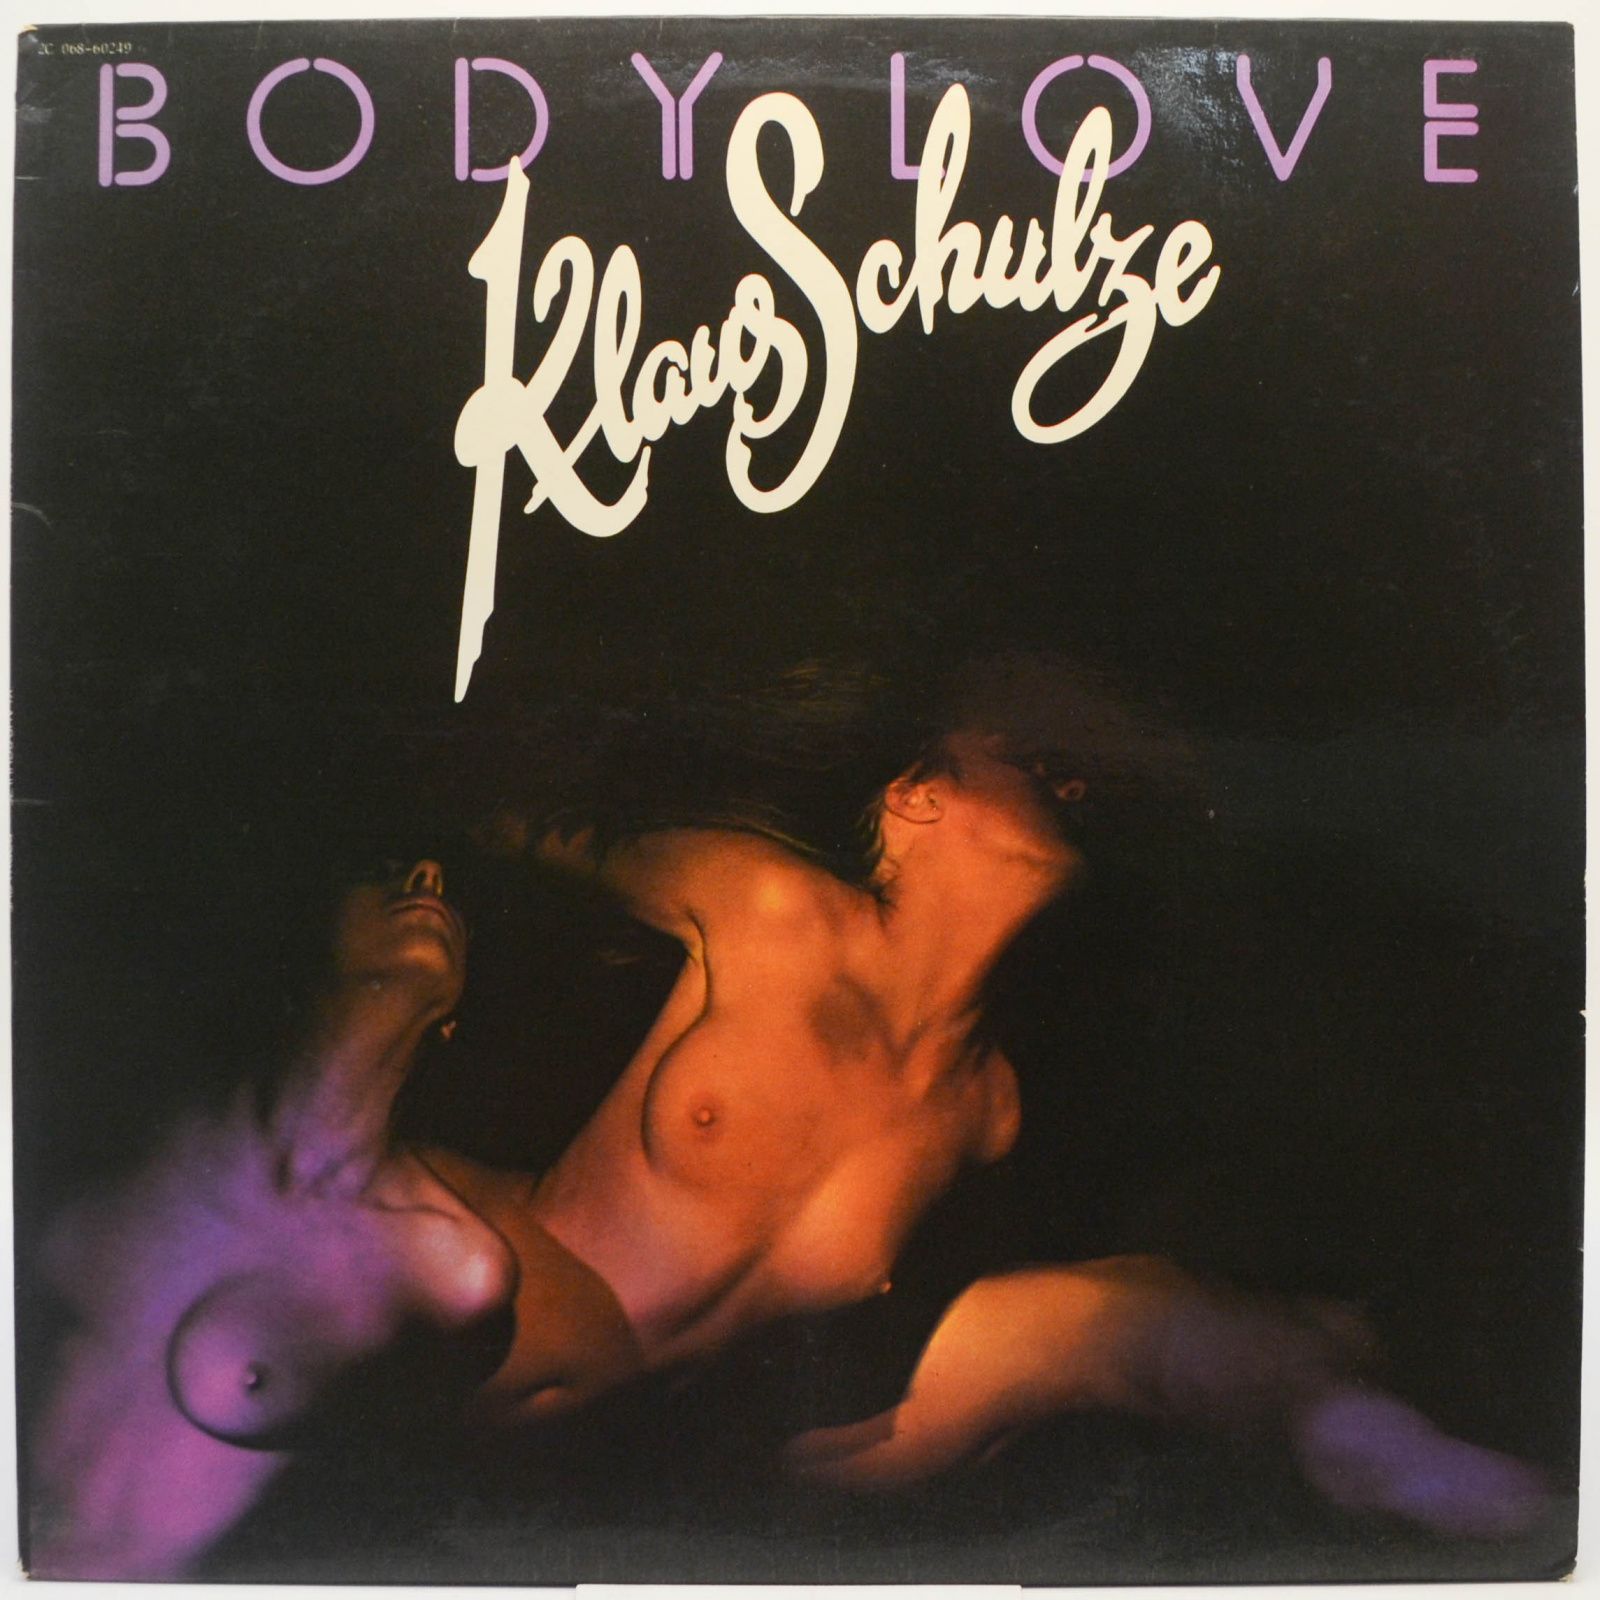 Klaus Schulze — Body Love - Additions To The Original Soundtrack, 1977